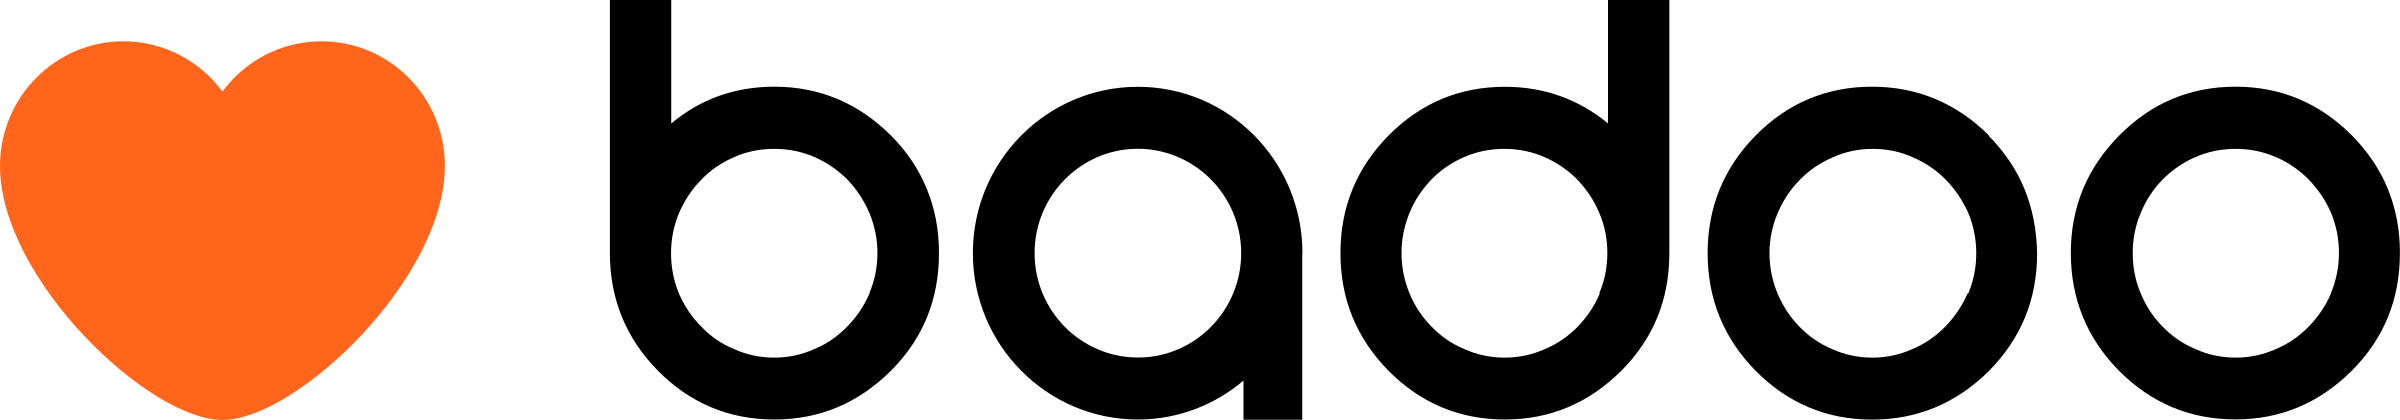 Badoo Logo - Badoo Logo PNG Transparent & SVG Vector - Freebie Supply